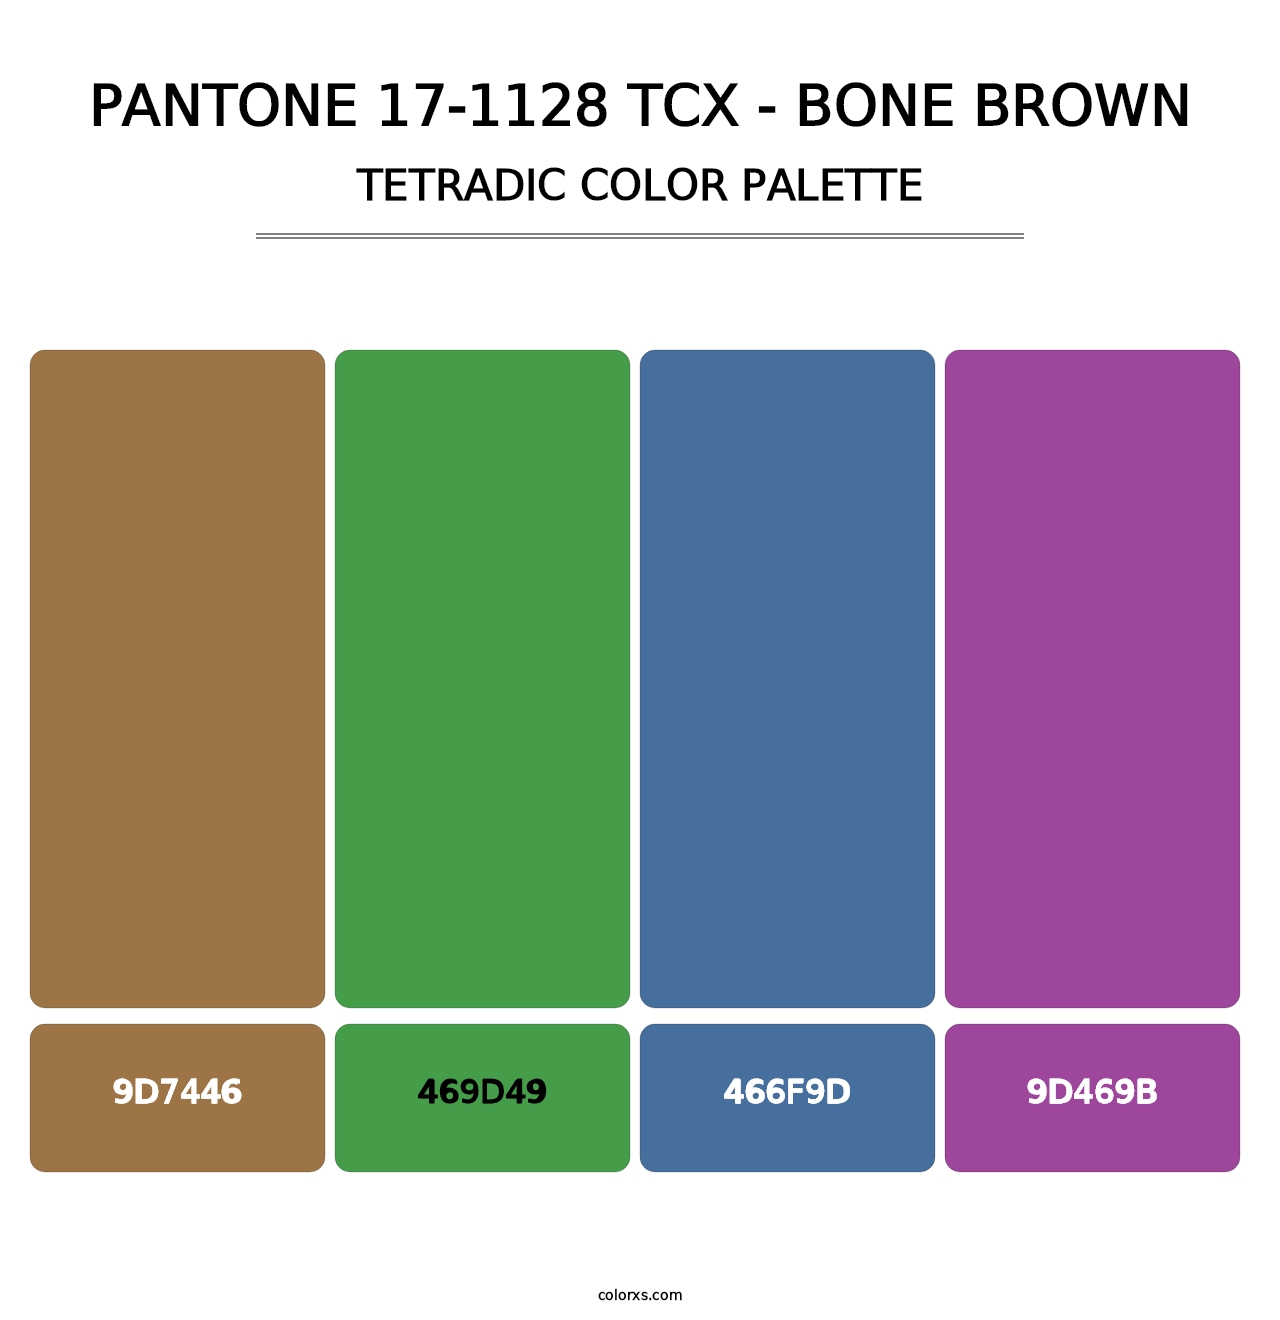 PANTONE 17-1128 TCX - Bone Brown - Tetradic Color Palette